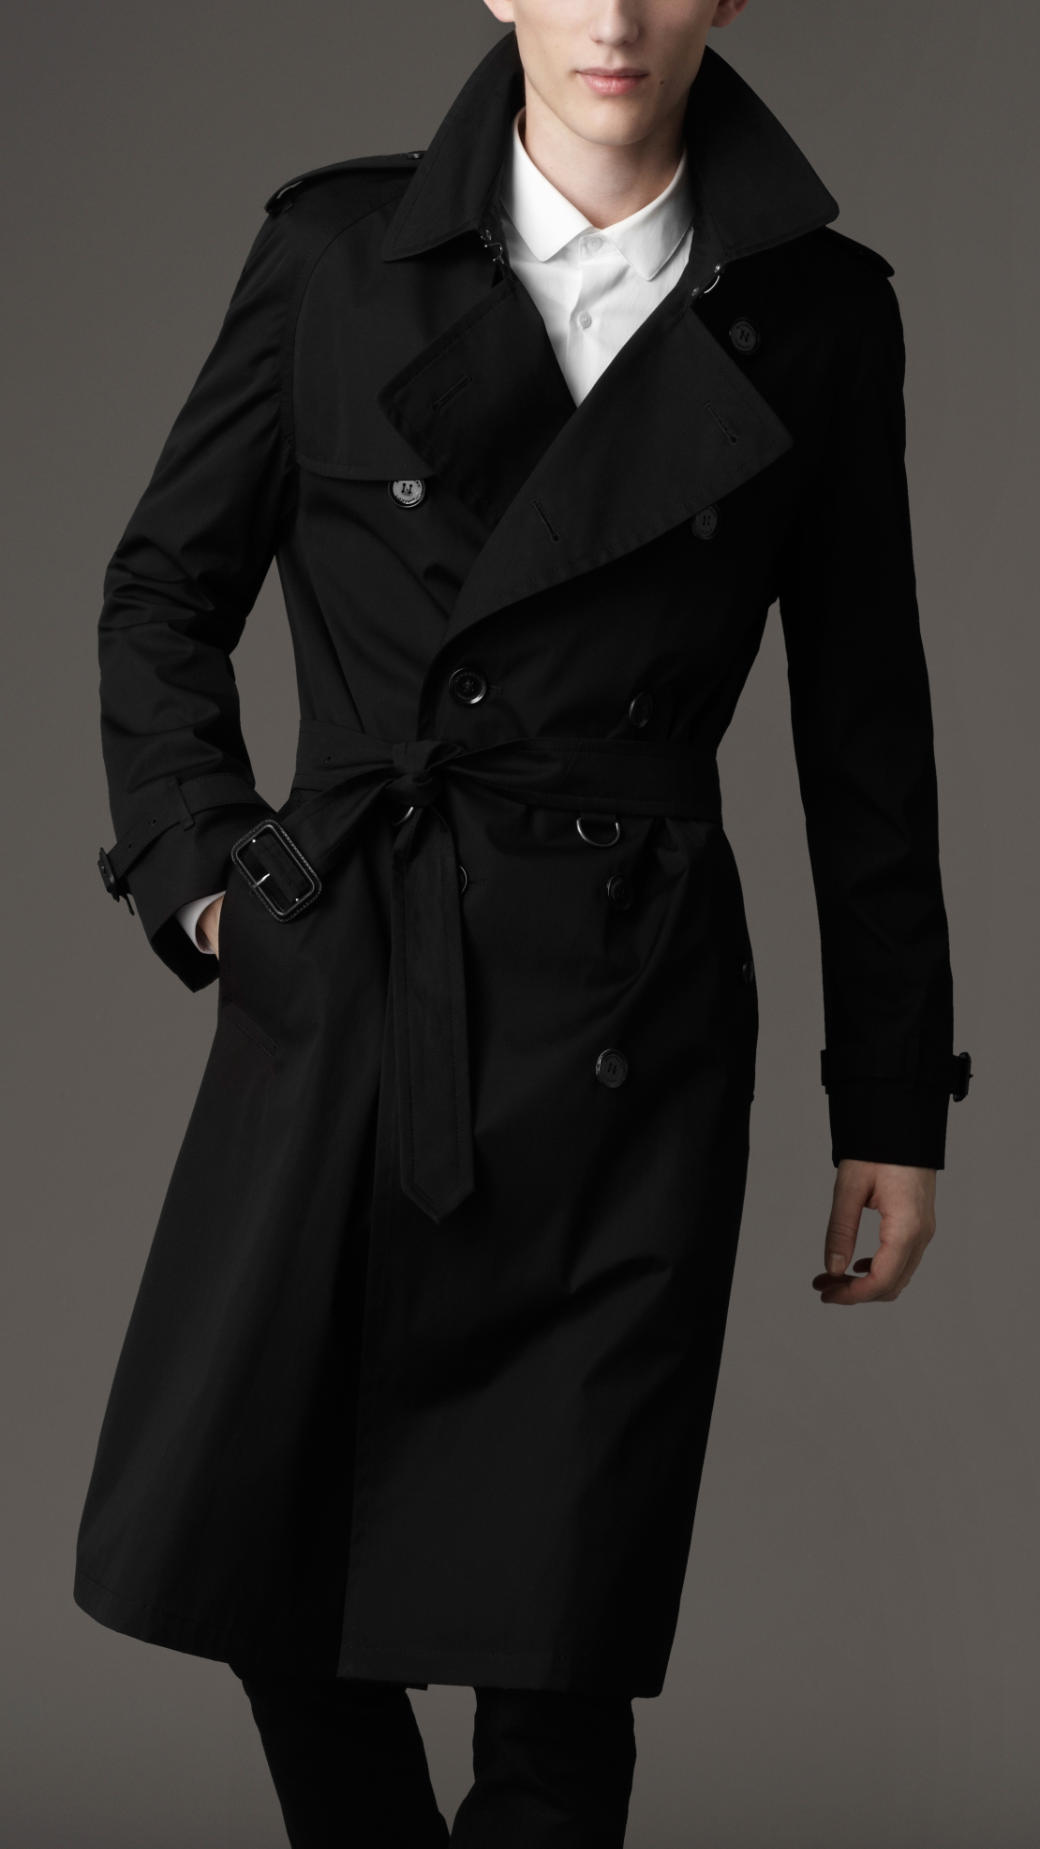 Burberry Long Back Pleat Trench Coat in Black for Men - Lyst